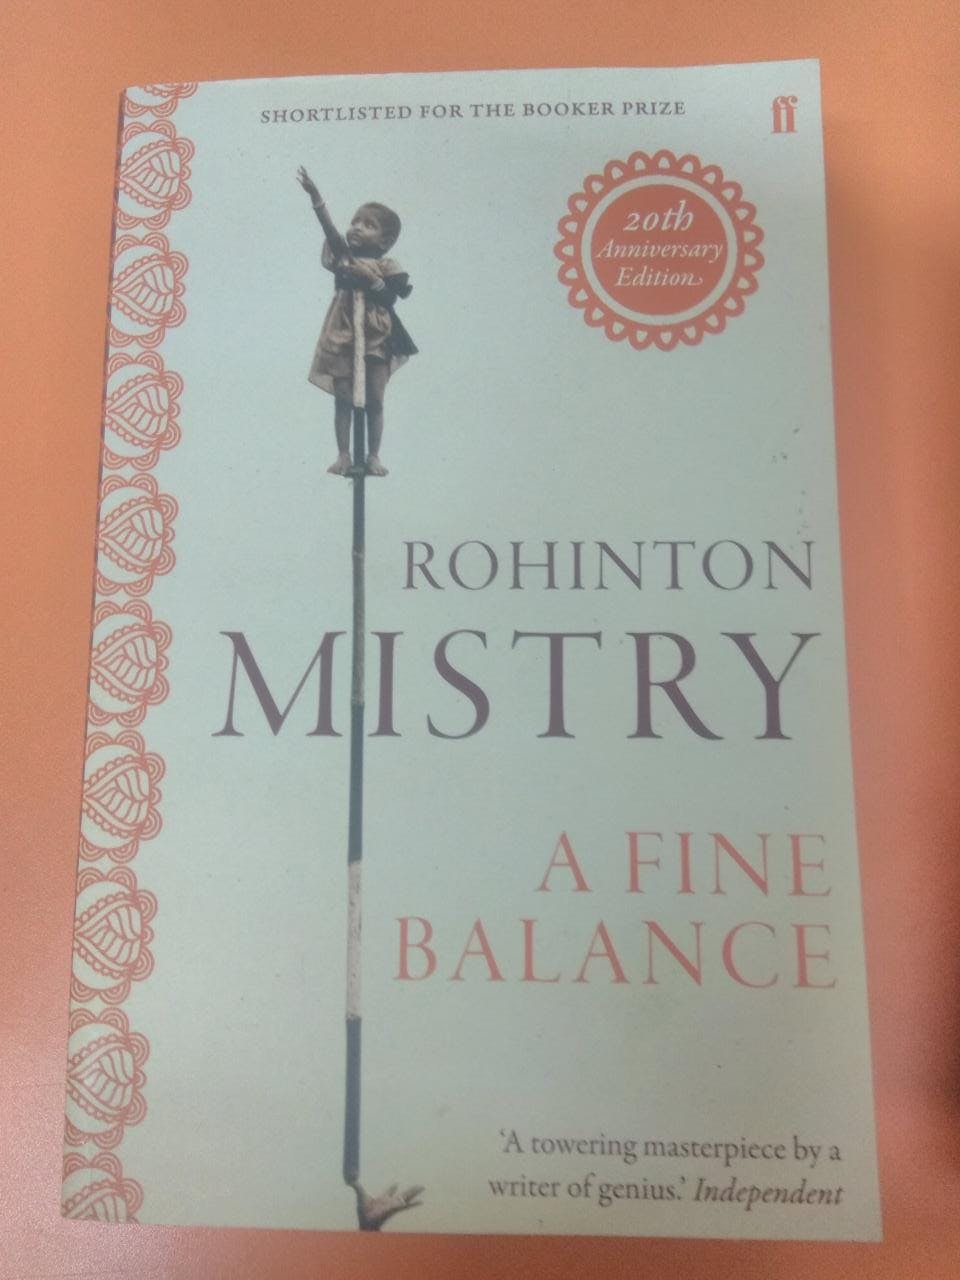 a fine balance book review